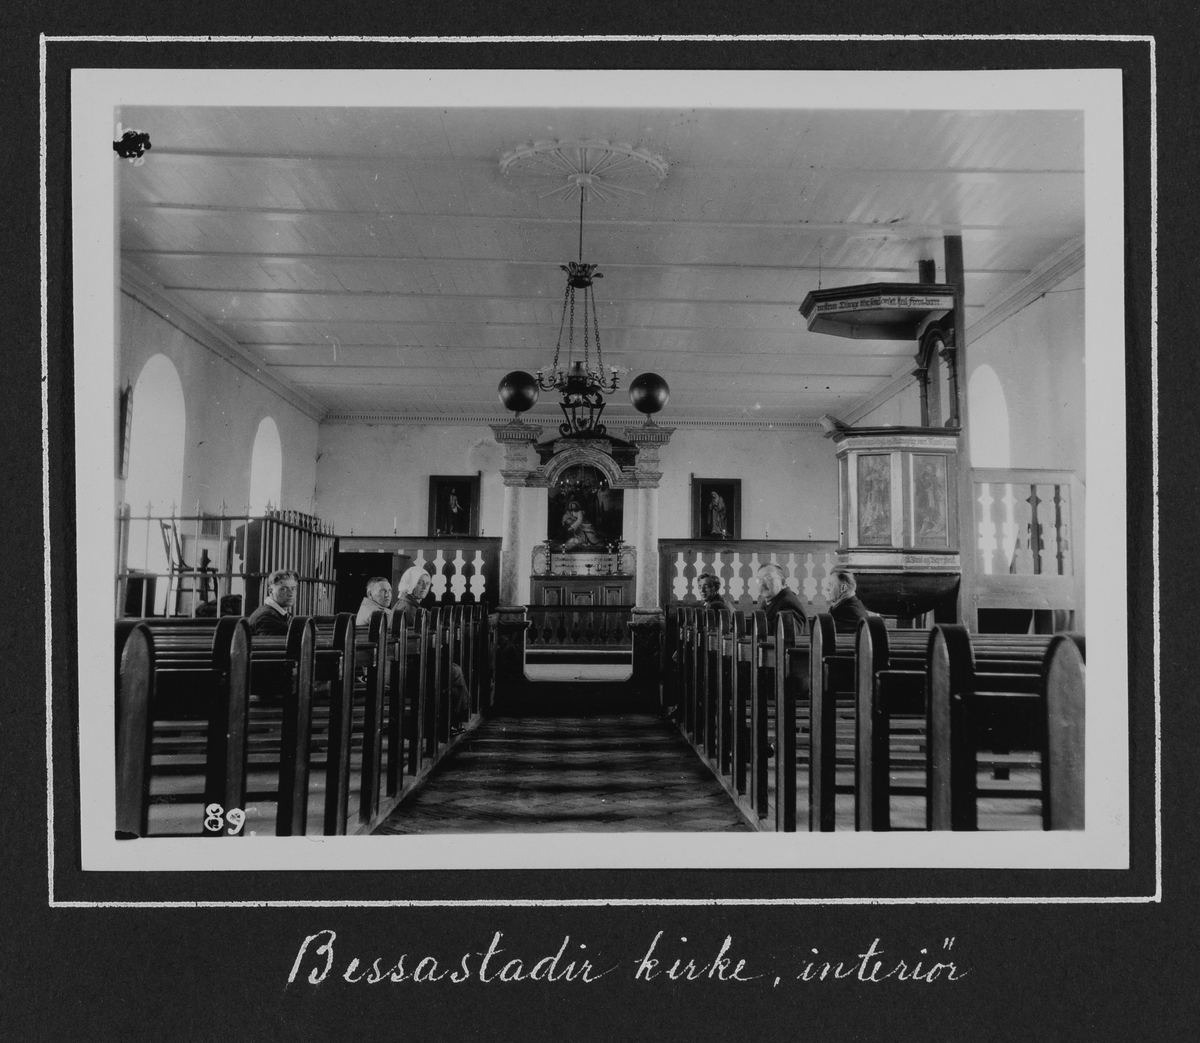 Fra 1000 årsfesten for Alltinget på Island i 1930. Bessastadir kirke, interiør.